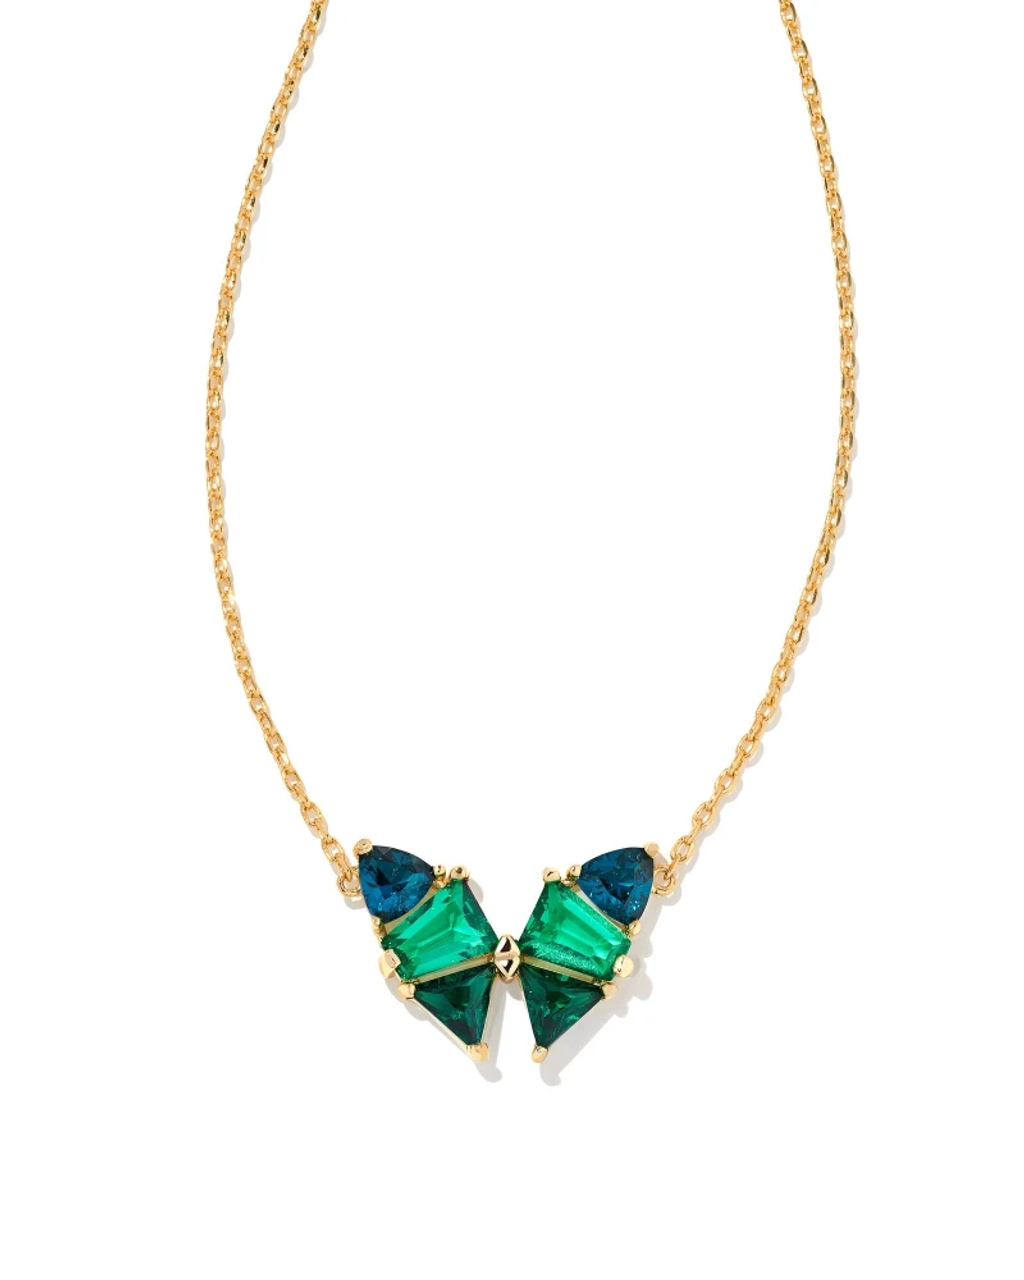 Dottie Gold Multi Strand Necklace in Emerald | Kendra Scott